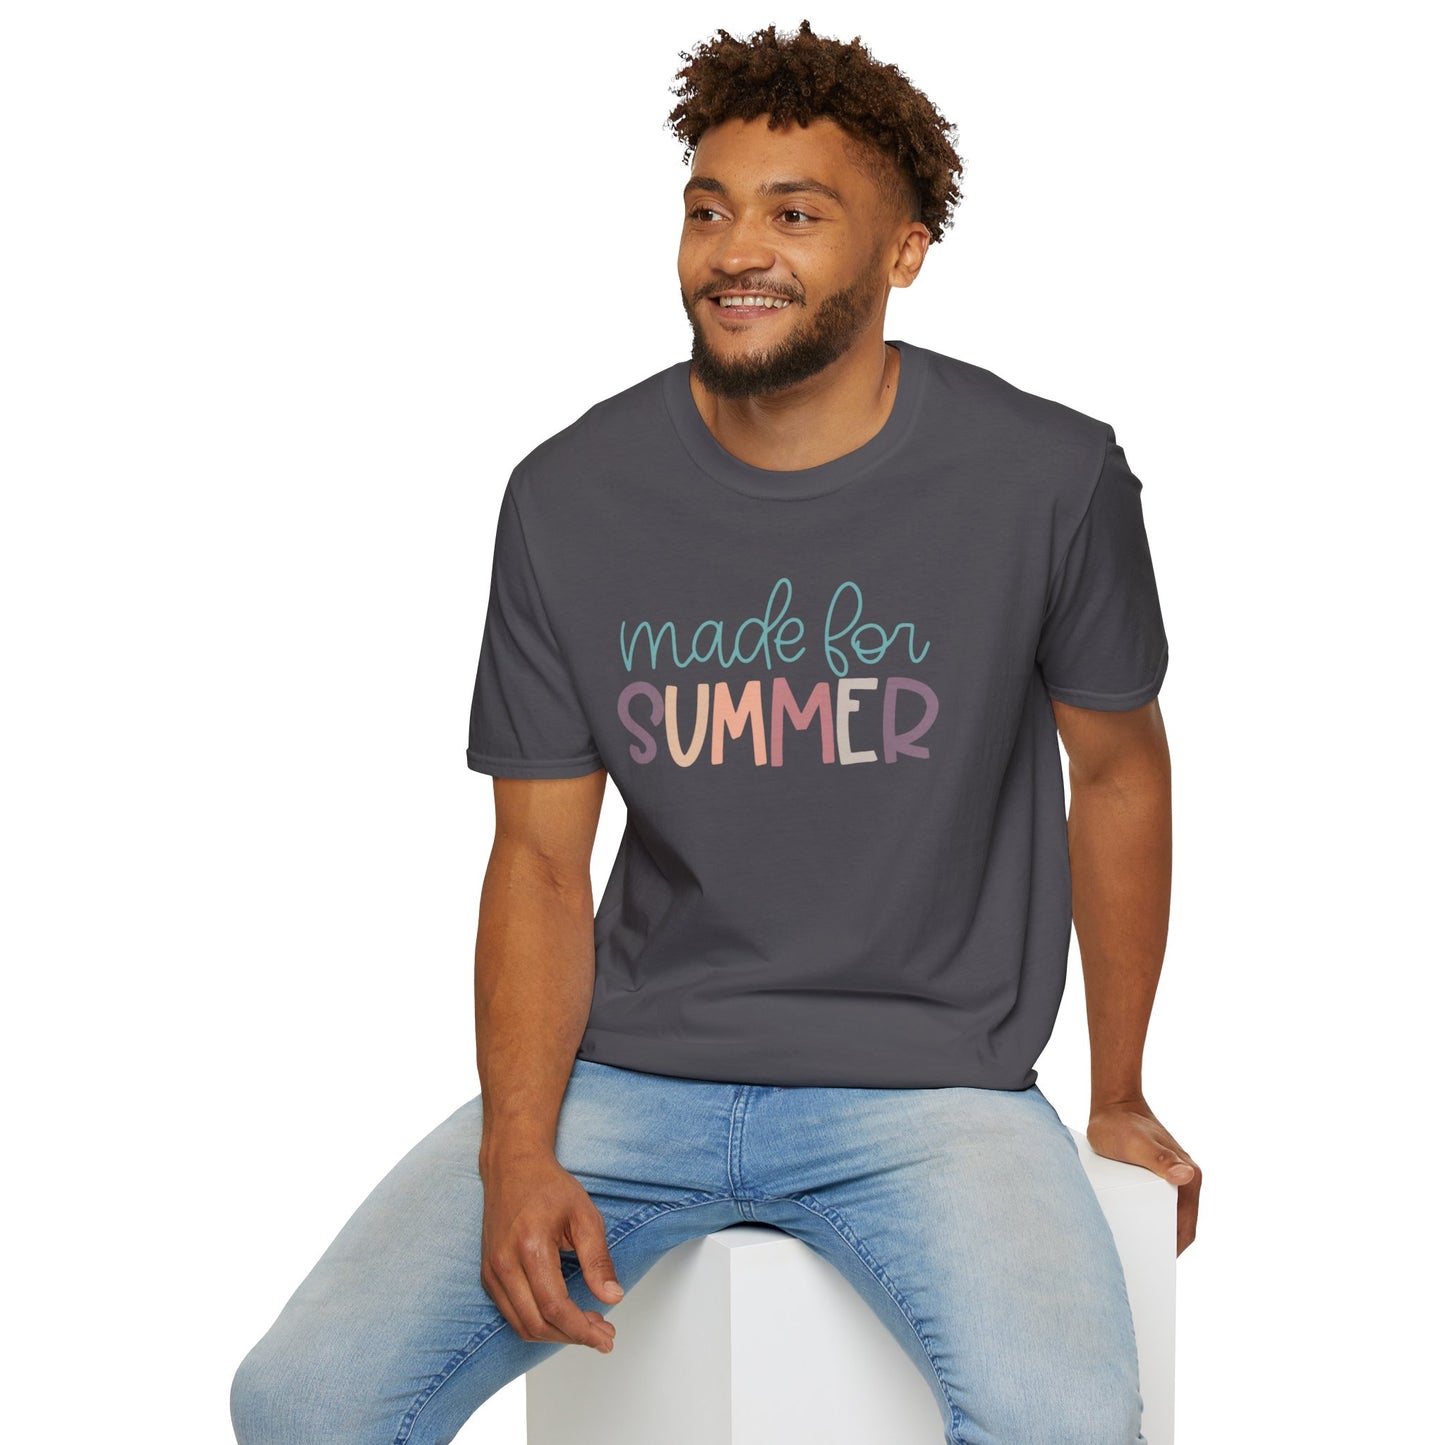 Made for Summer T-Shirt